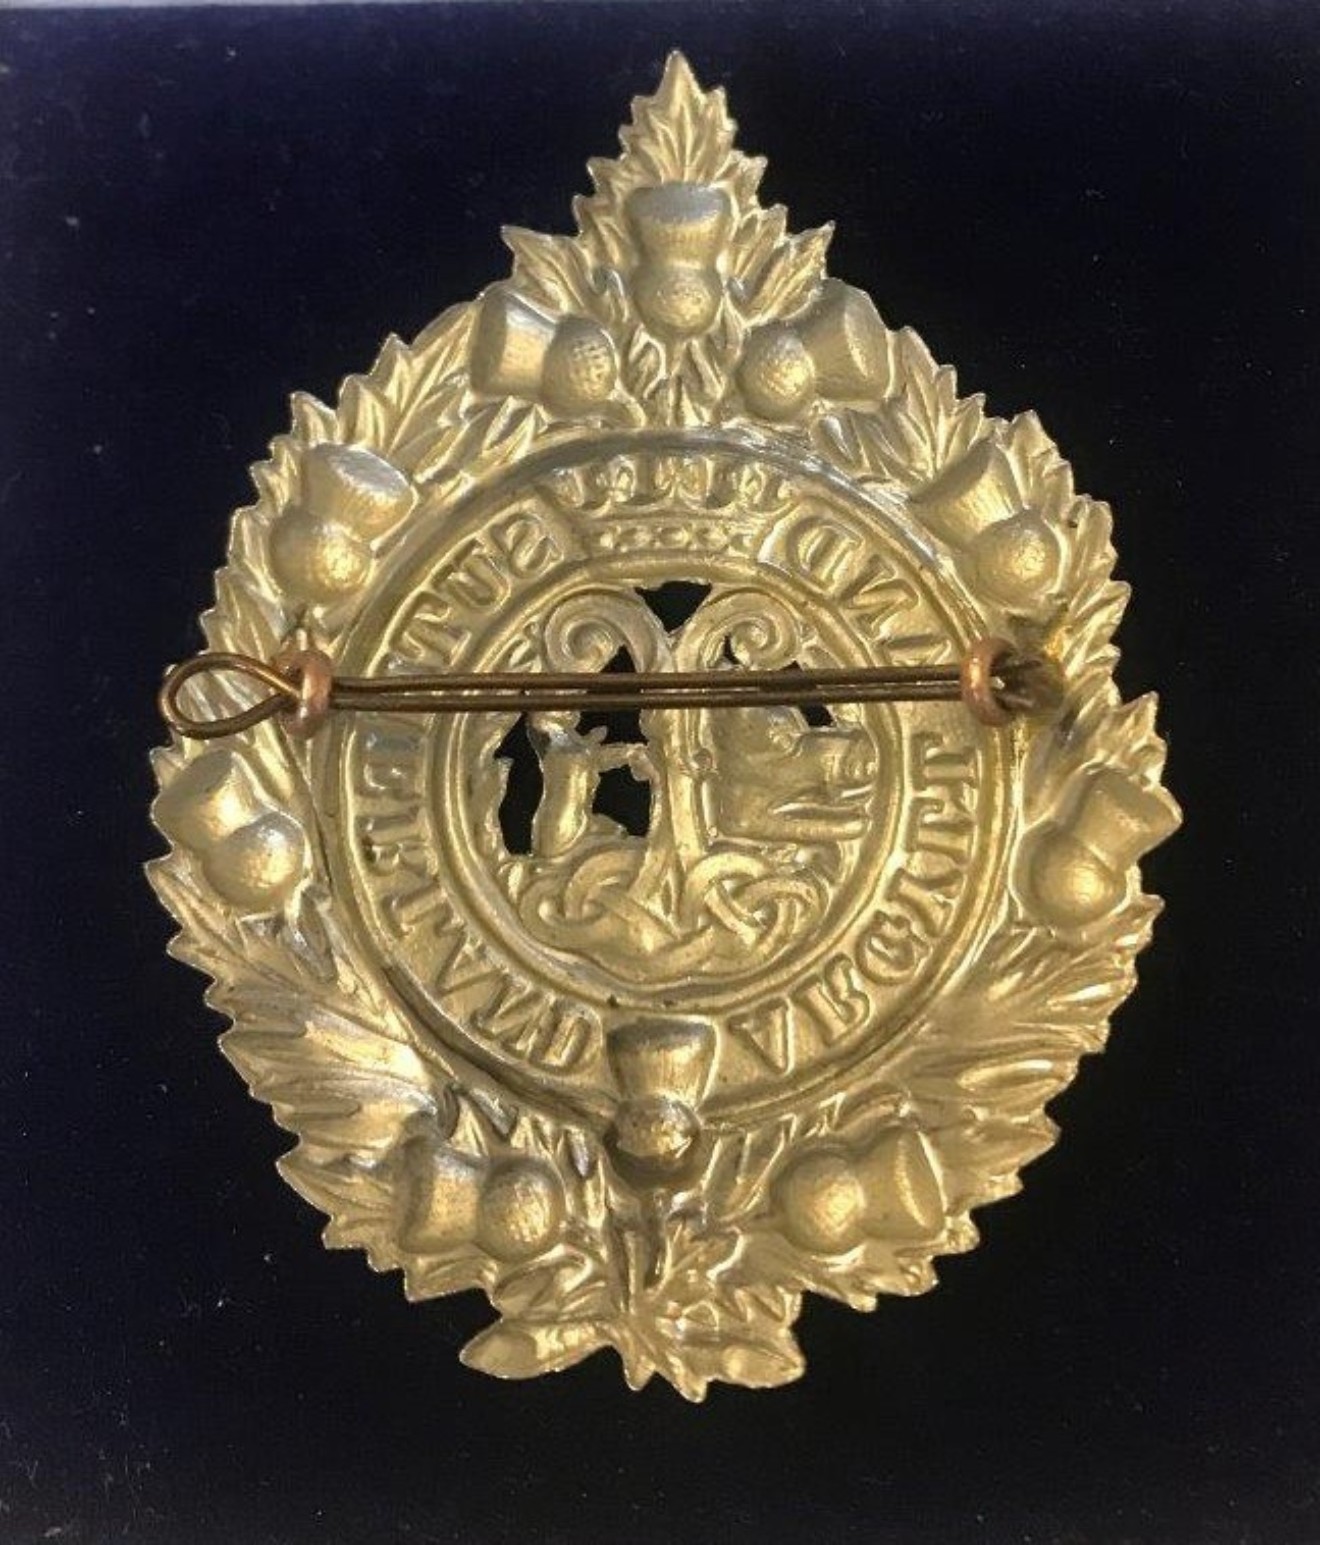 Argyll & Sutherland Highlanders White Metal Cap Badge - Bruce of Ballater